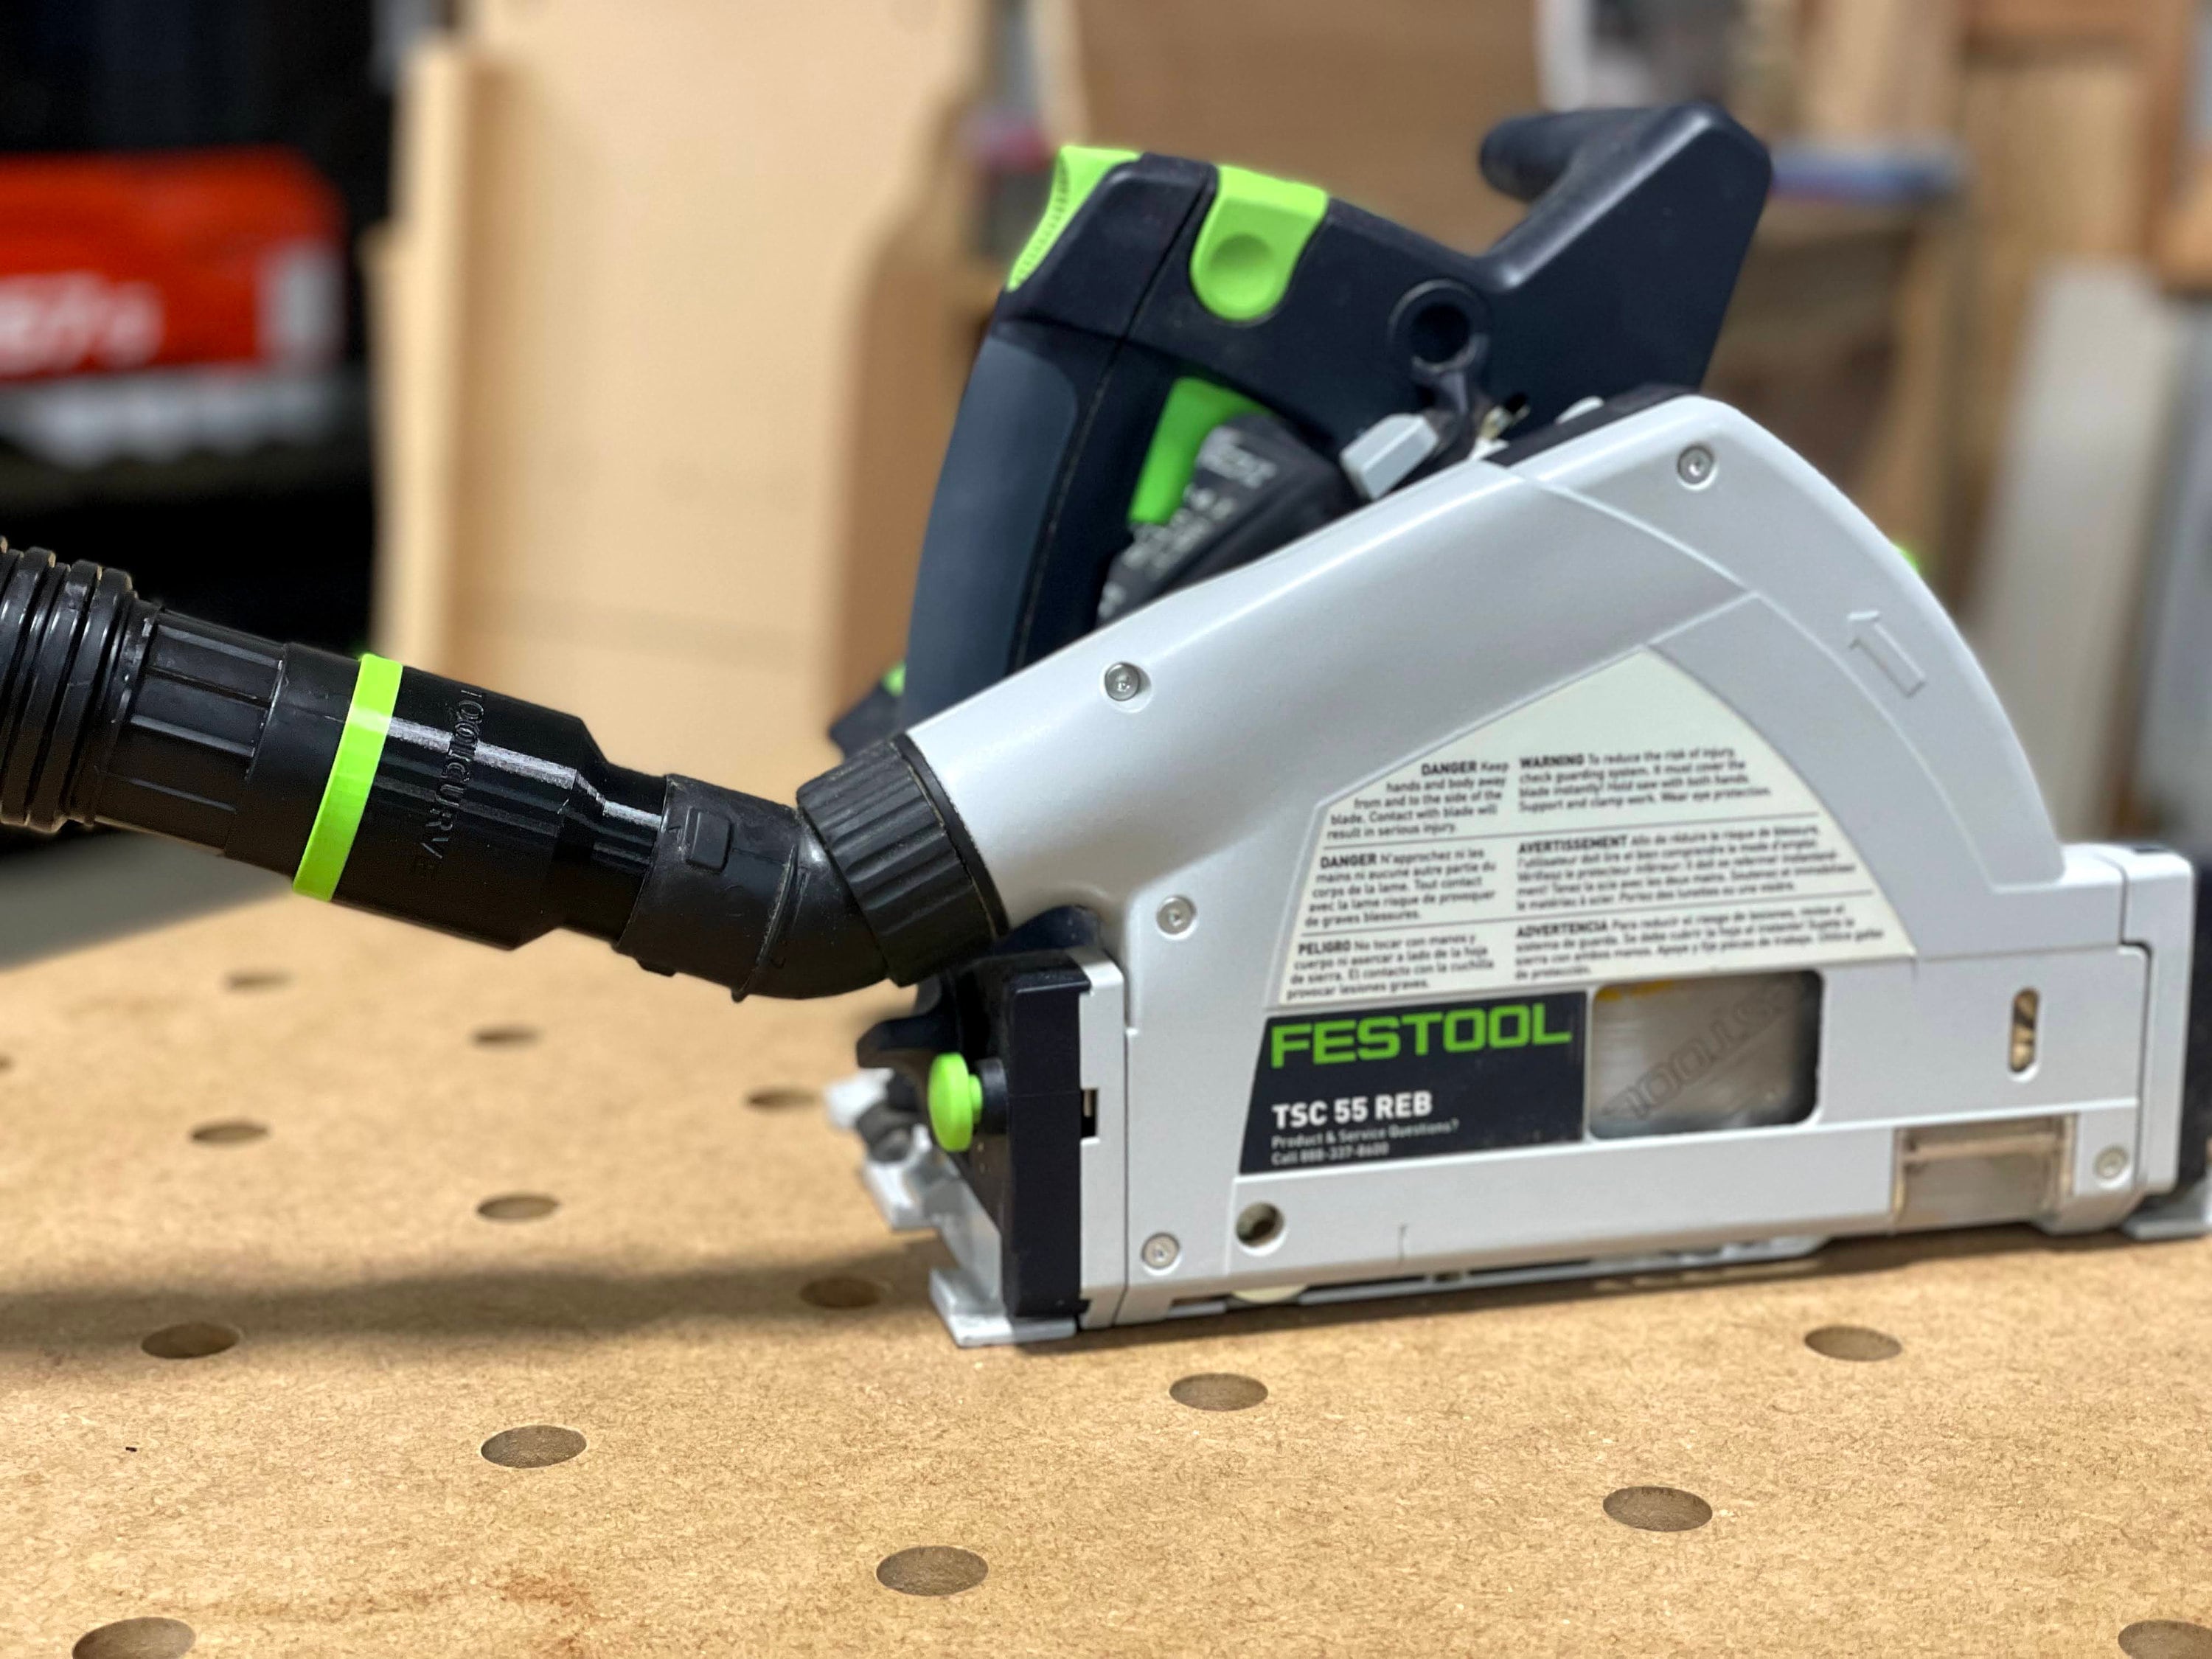 Vacuum adapter for Festool Track Saws for Ridgid,ShopVac,Craftsman –  MegaLoop Designs